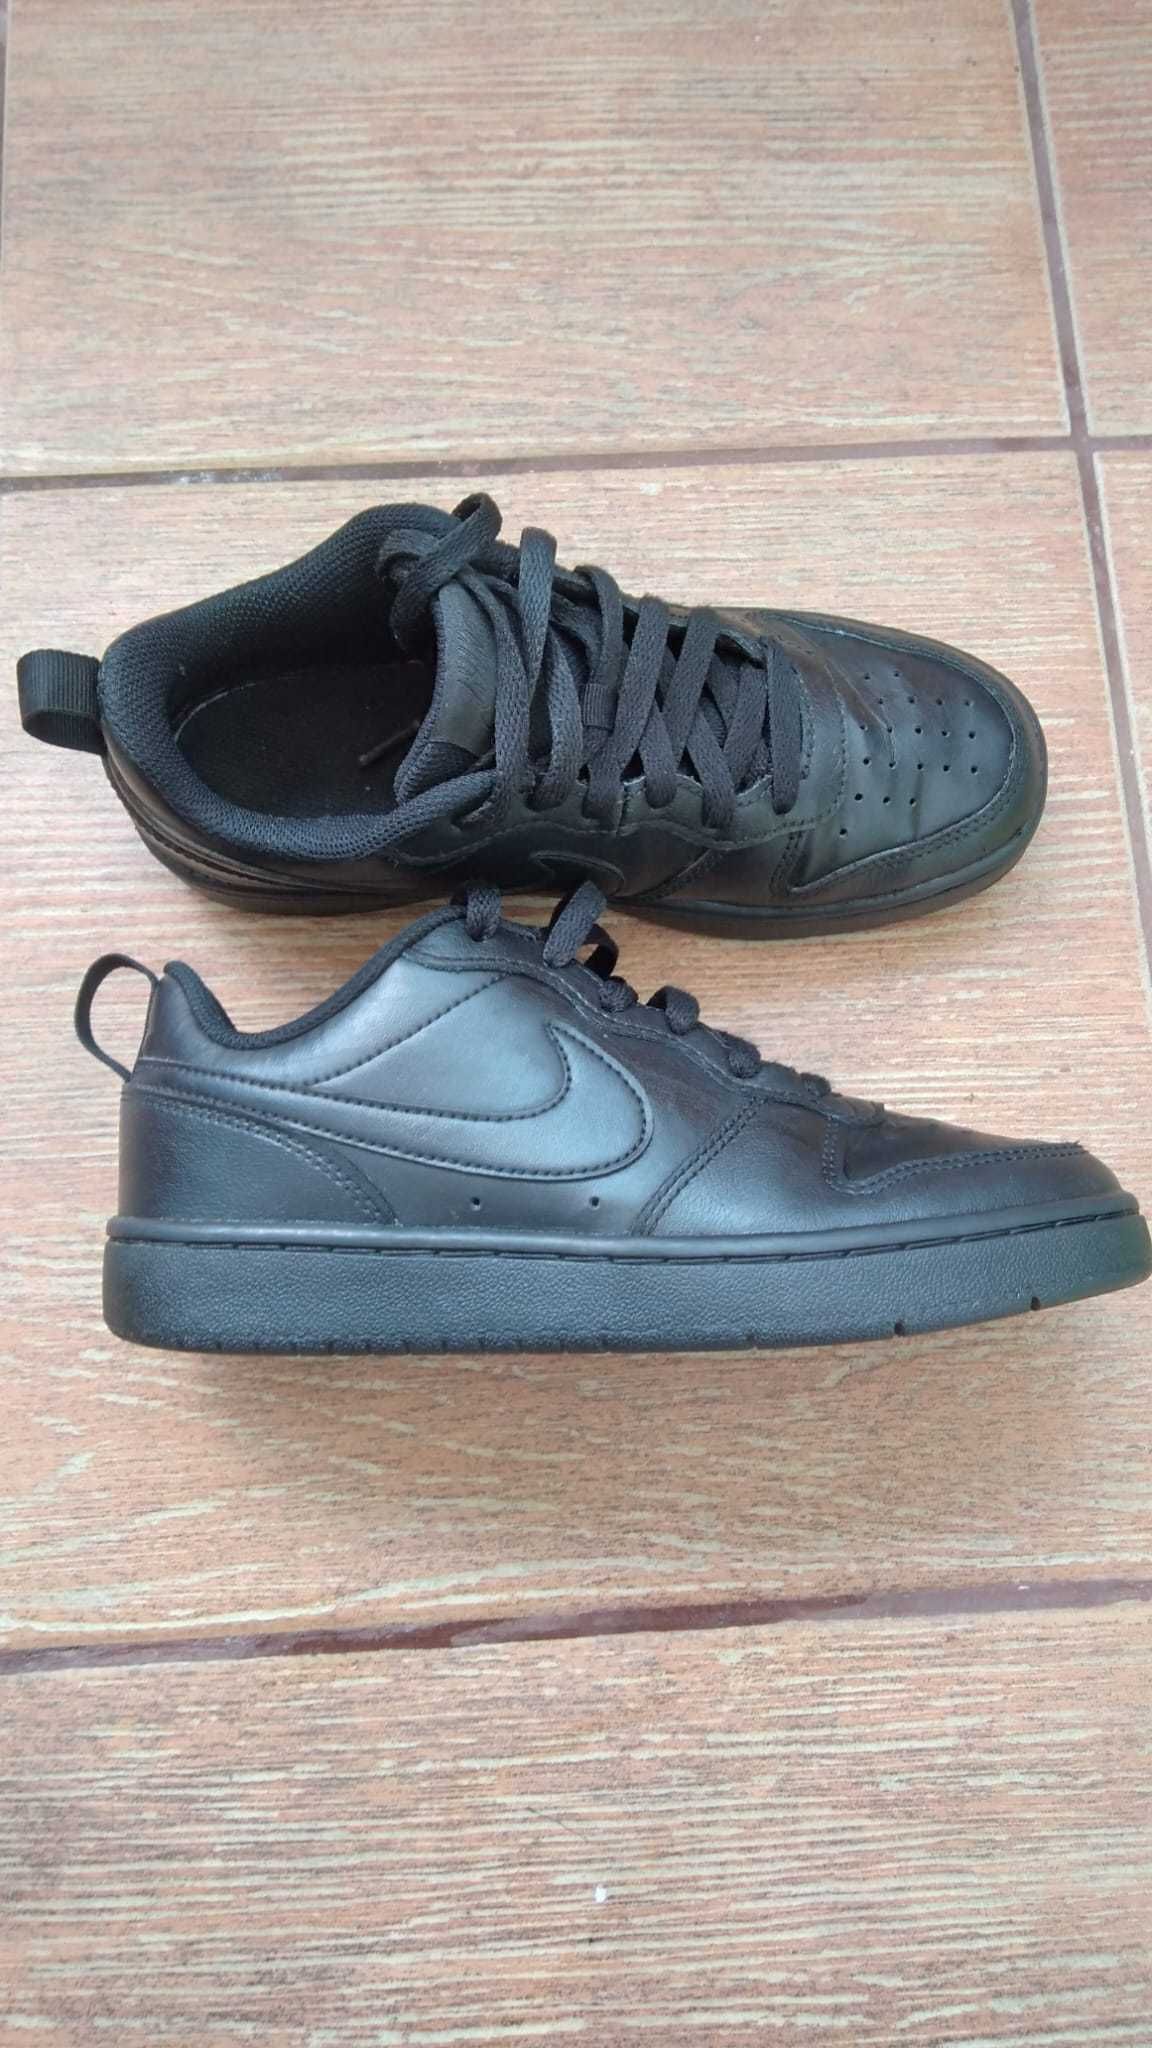 adidas/pantof sport nike negru marime 36,5